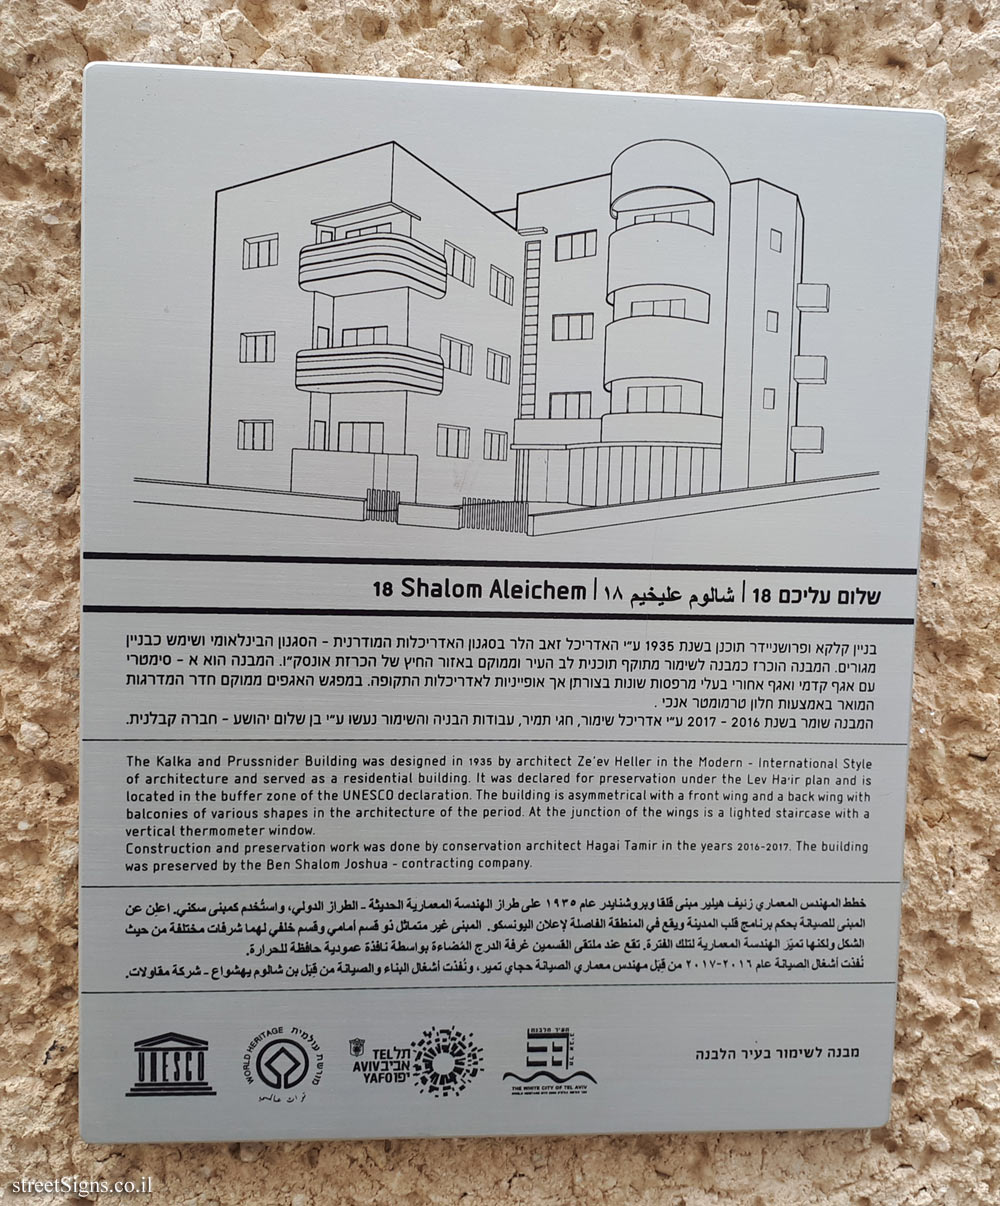 Tel Aviv - buildings for conservation - 18 Shalom Aleichem